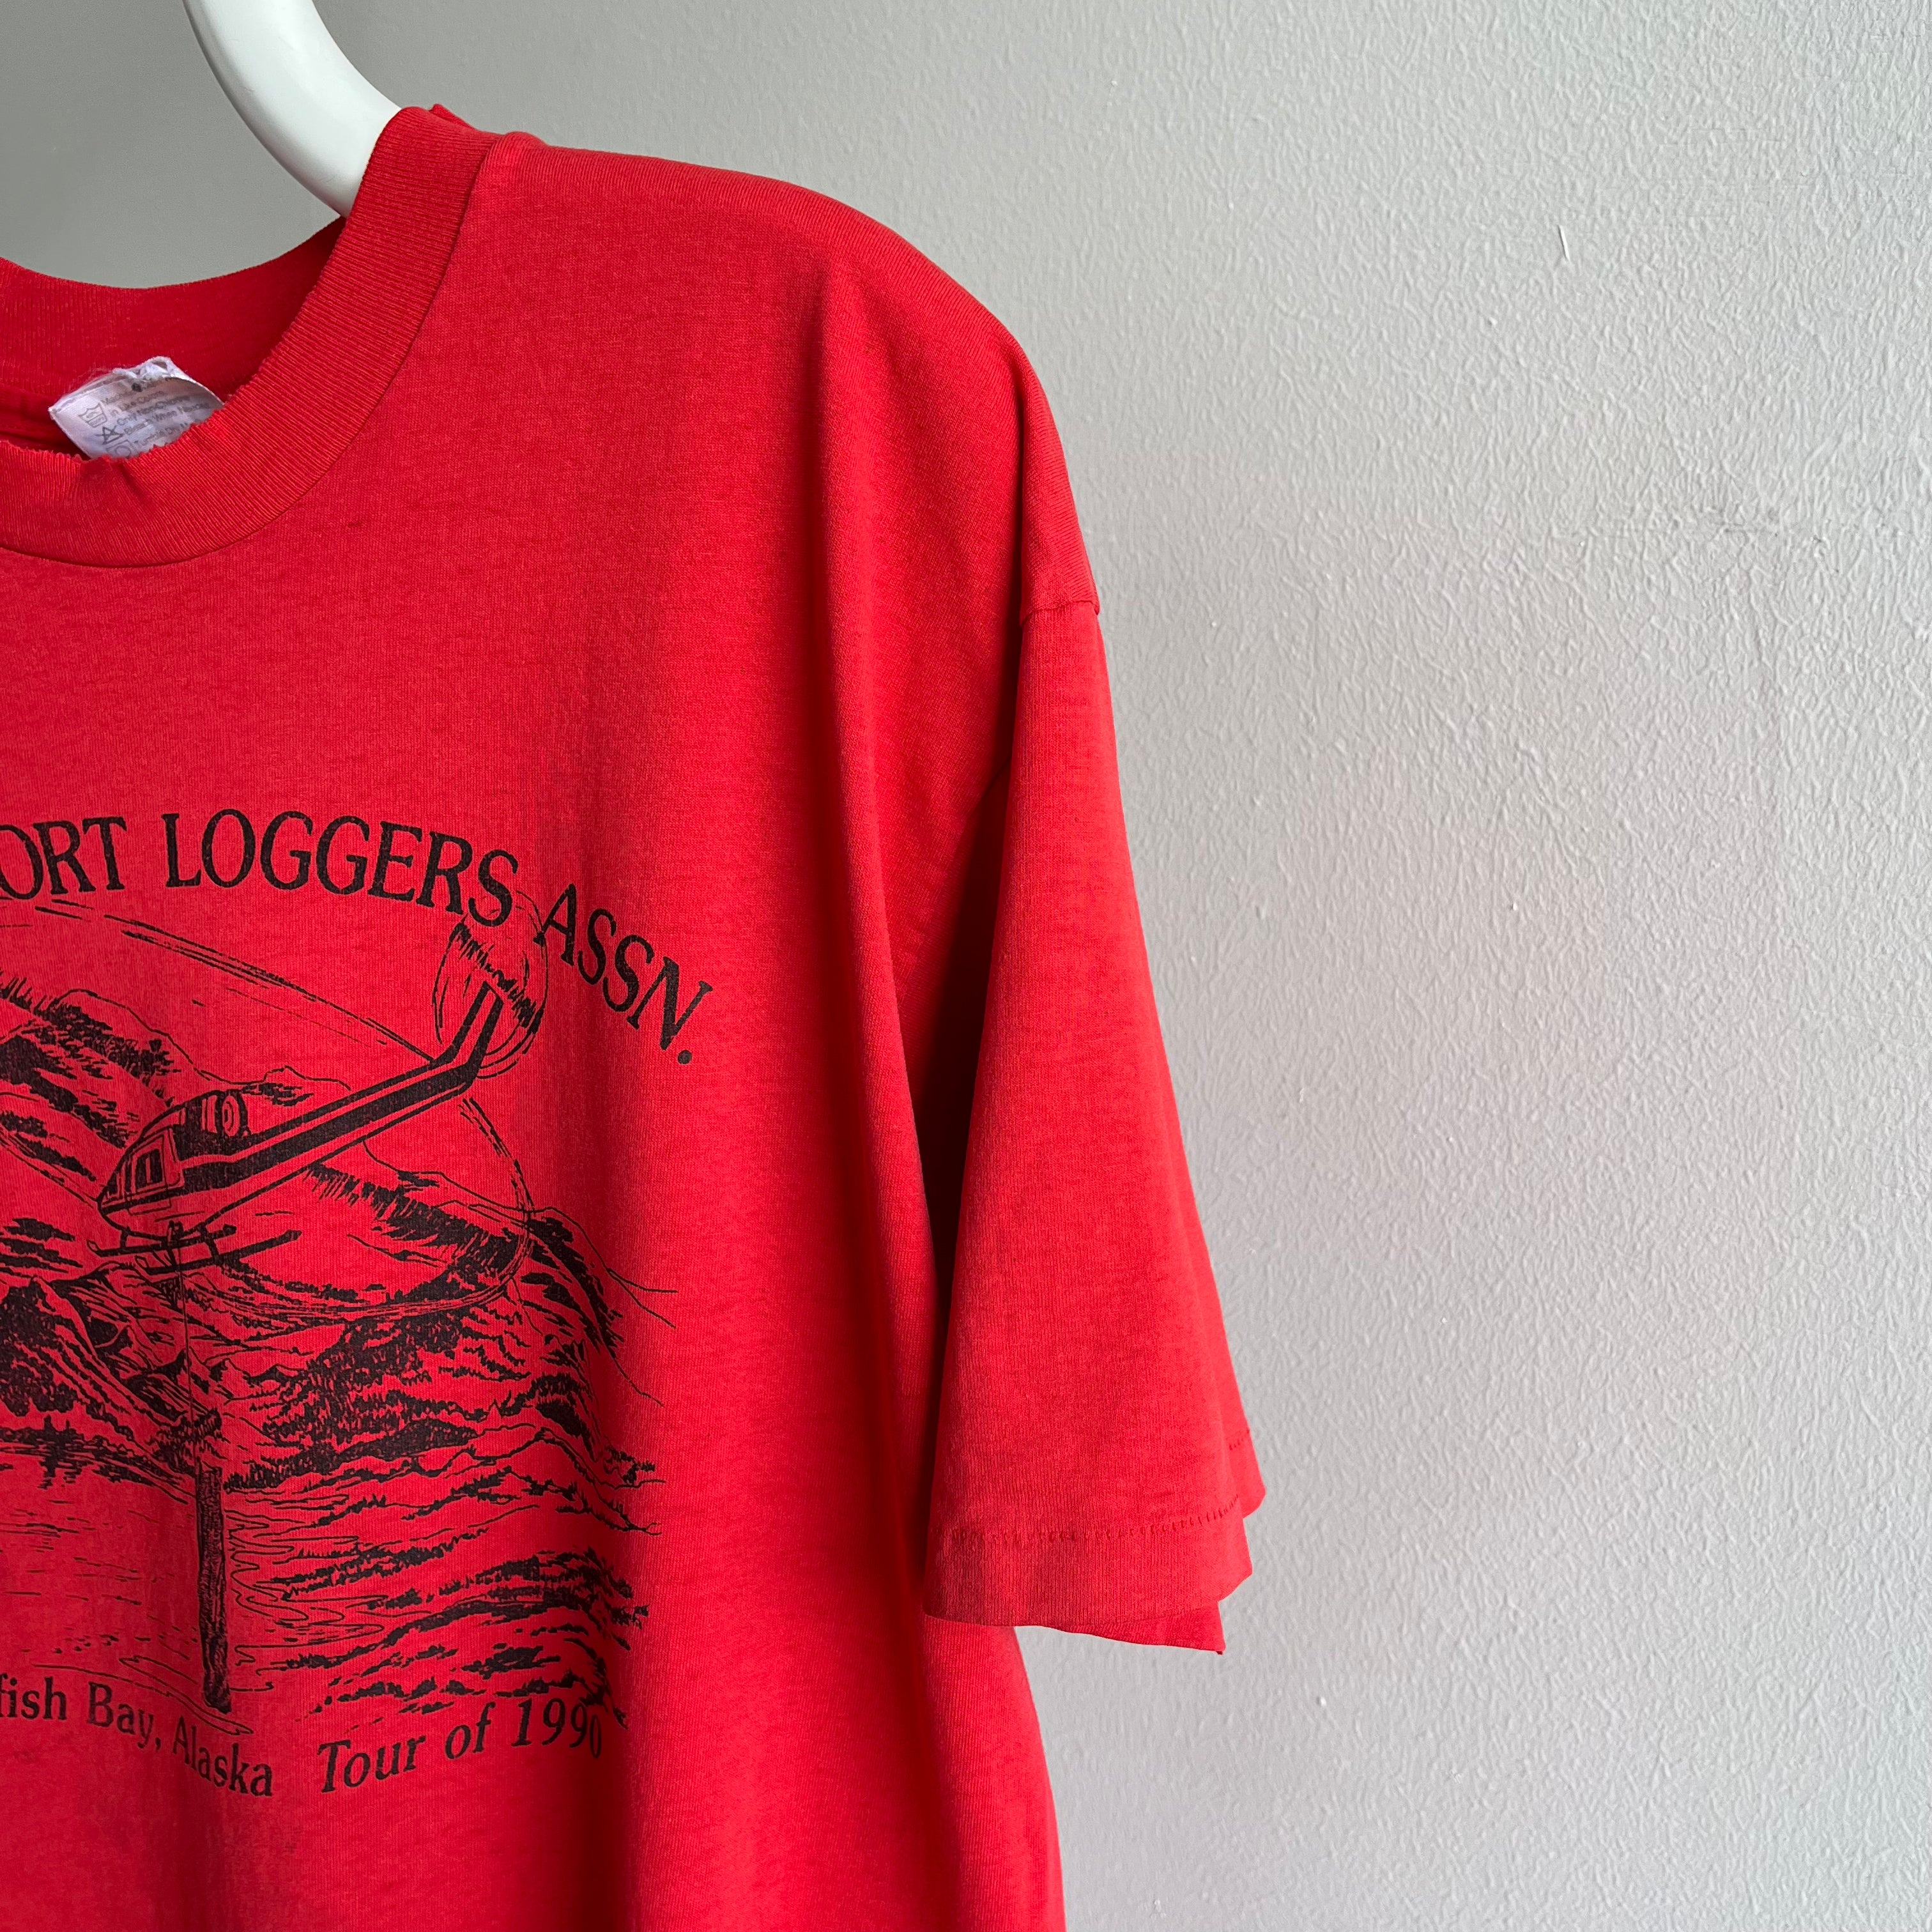 1990 Alaska Sport Loggers Assn. Dogfish Bay T-Shirt !!!